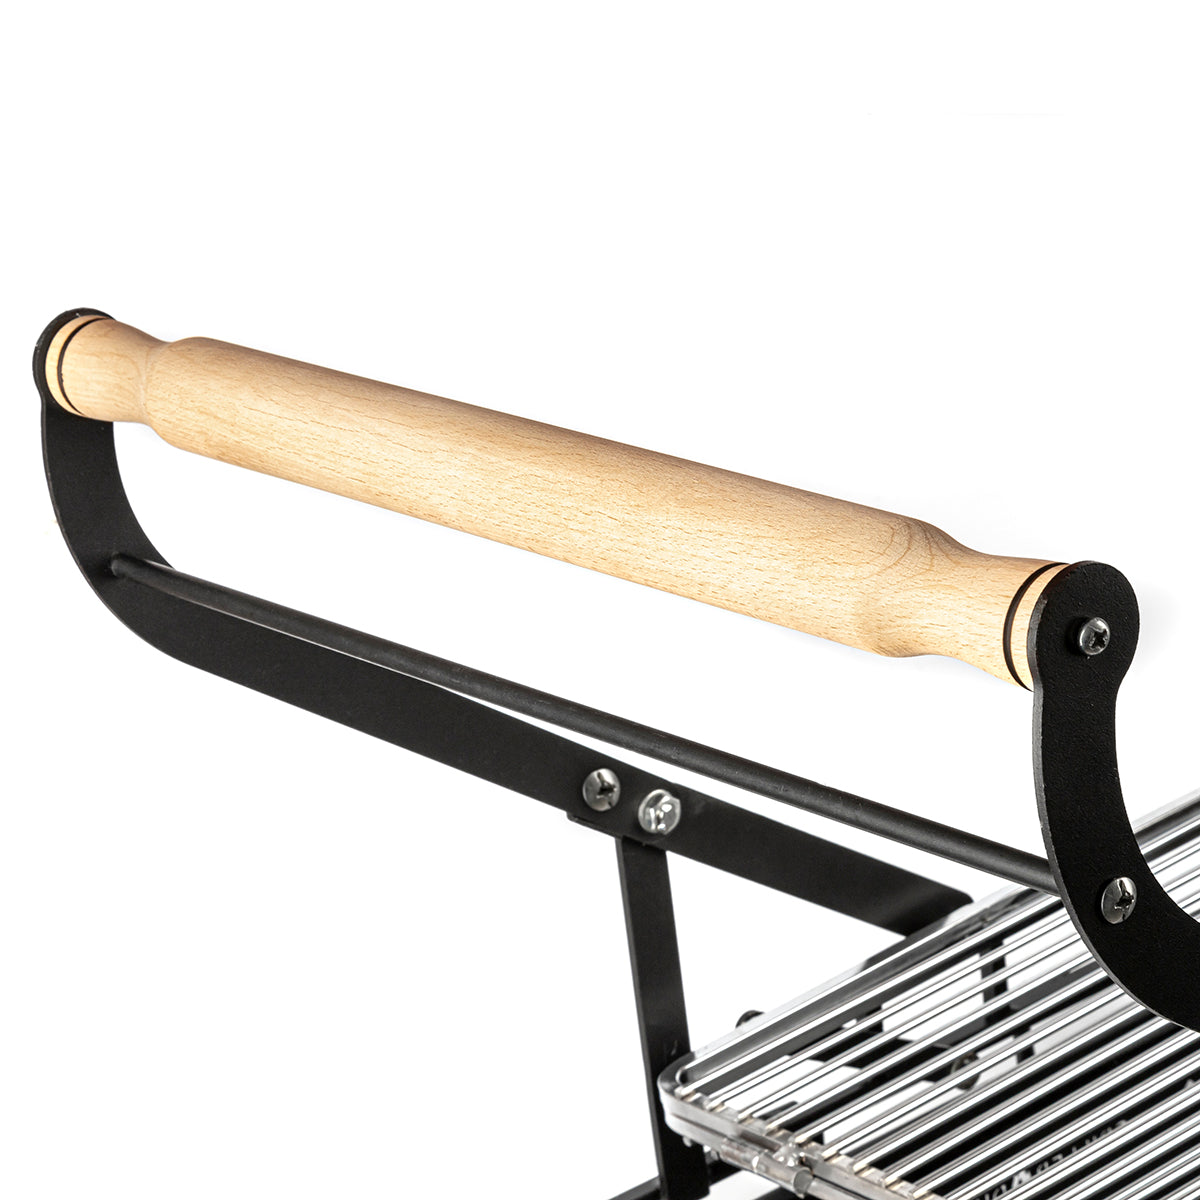 Handmade sturdy wooden handle